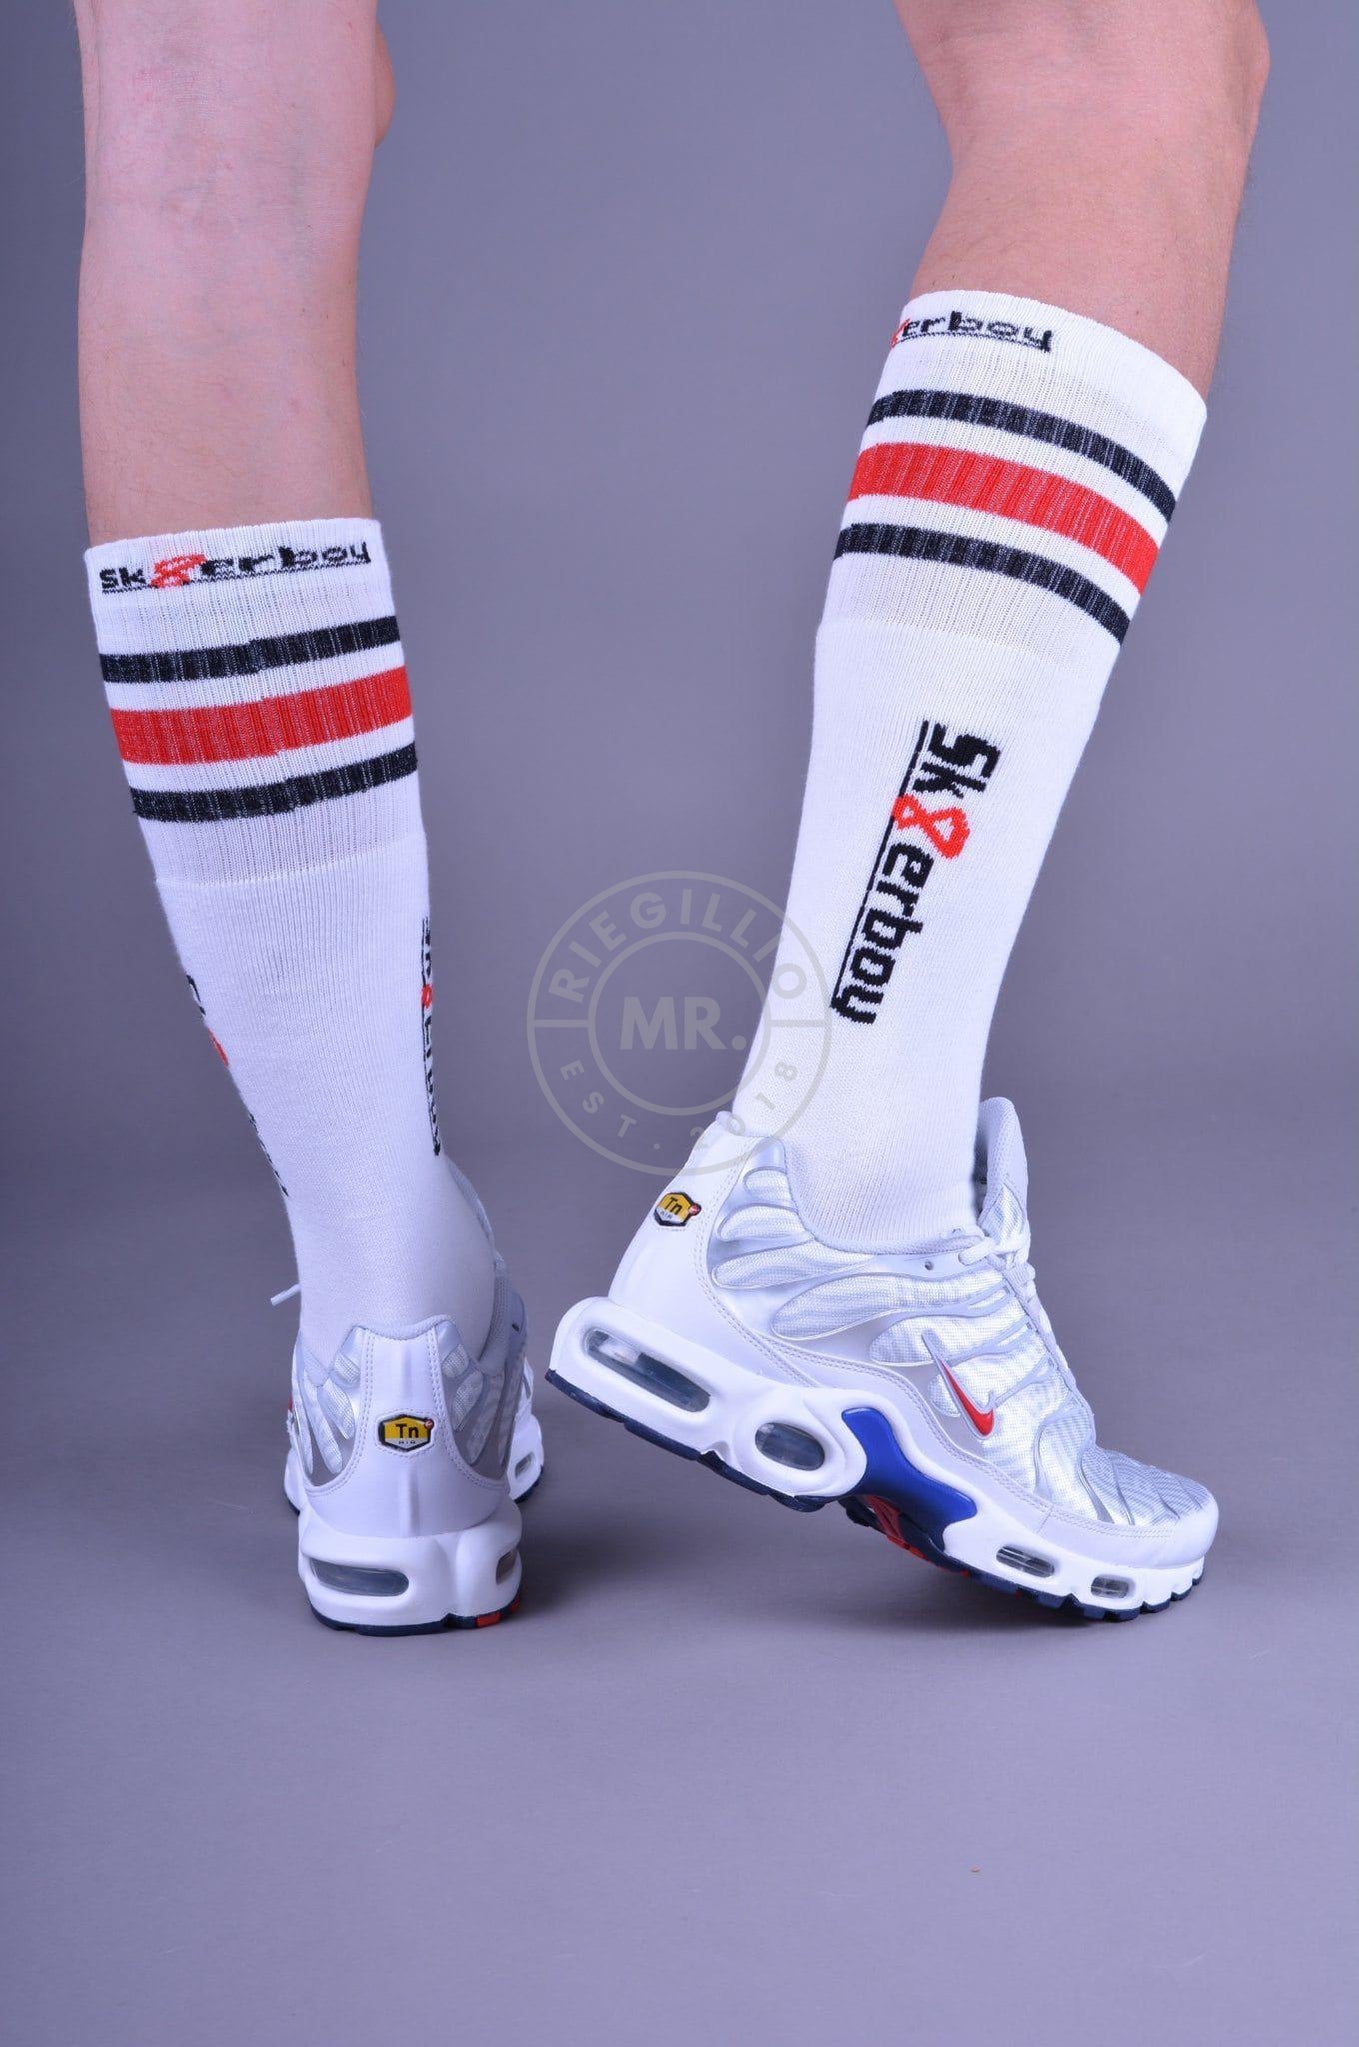 Sk8erboy Tube Socks at MR. Riegillio